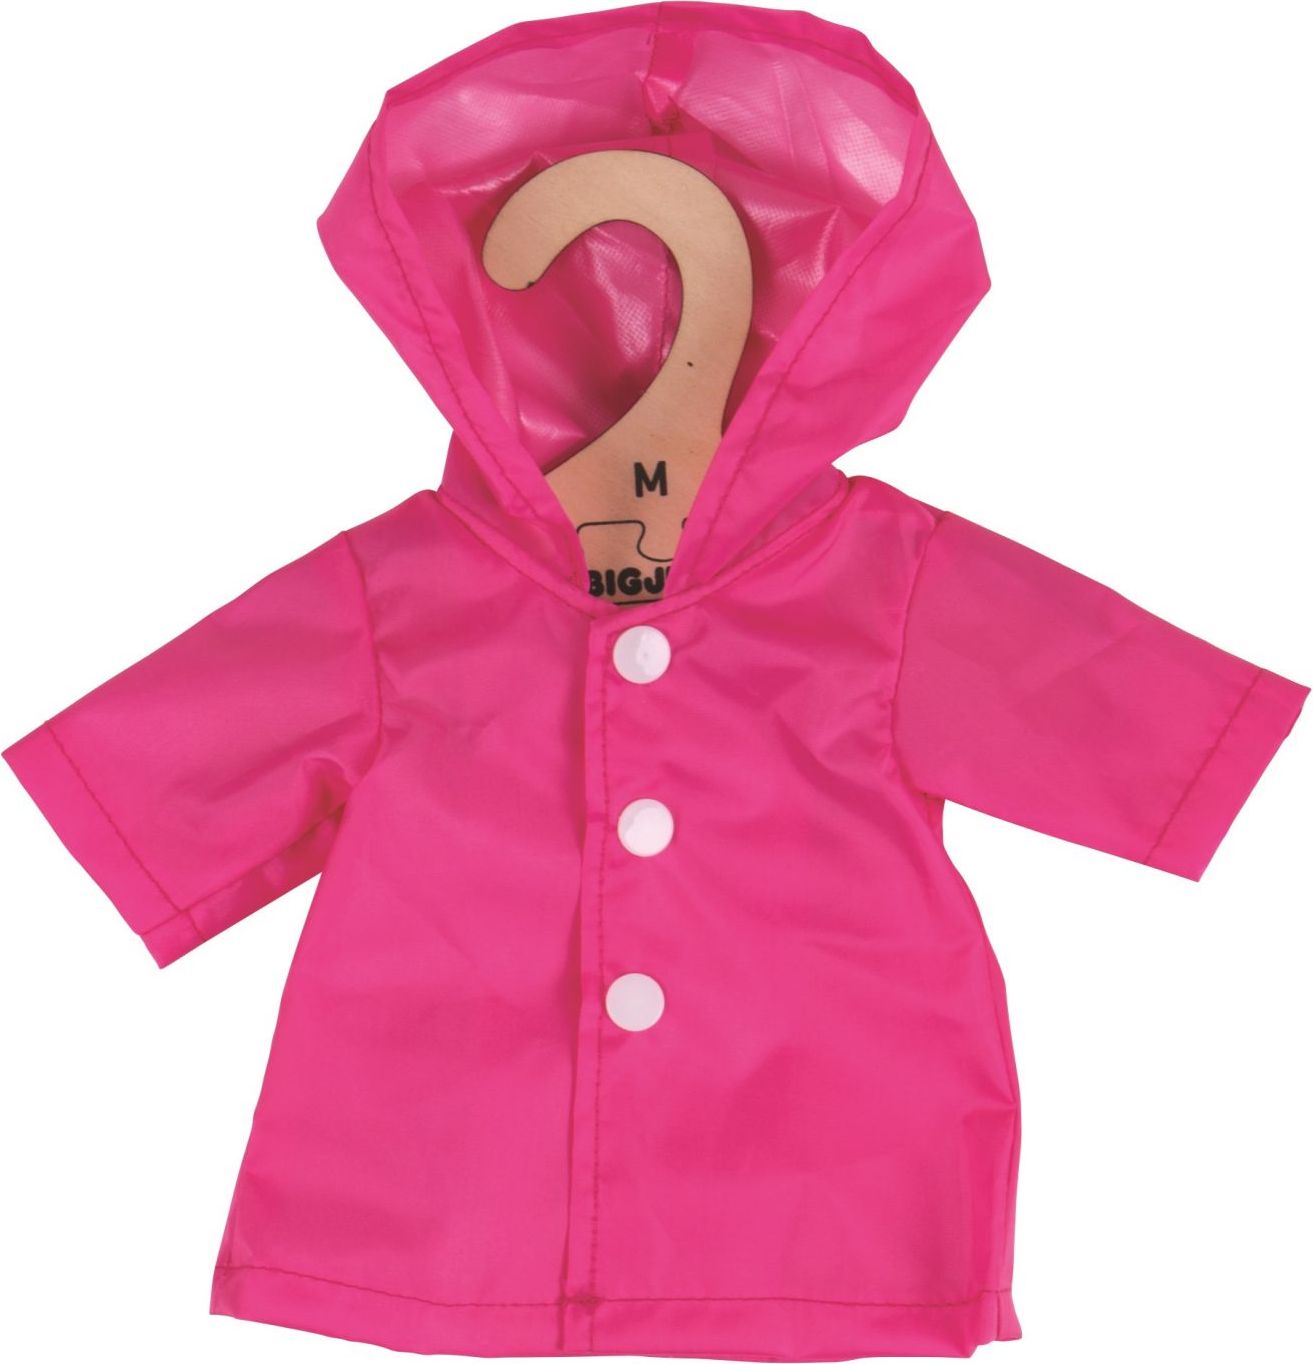 Bigjigs Toys Růžový kabátek  pro panenku 34 cm - obrázek 1